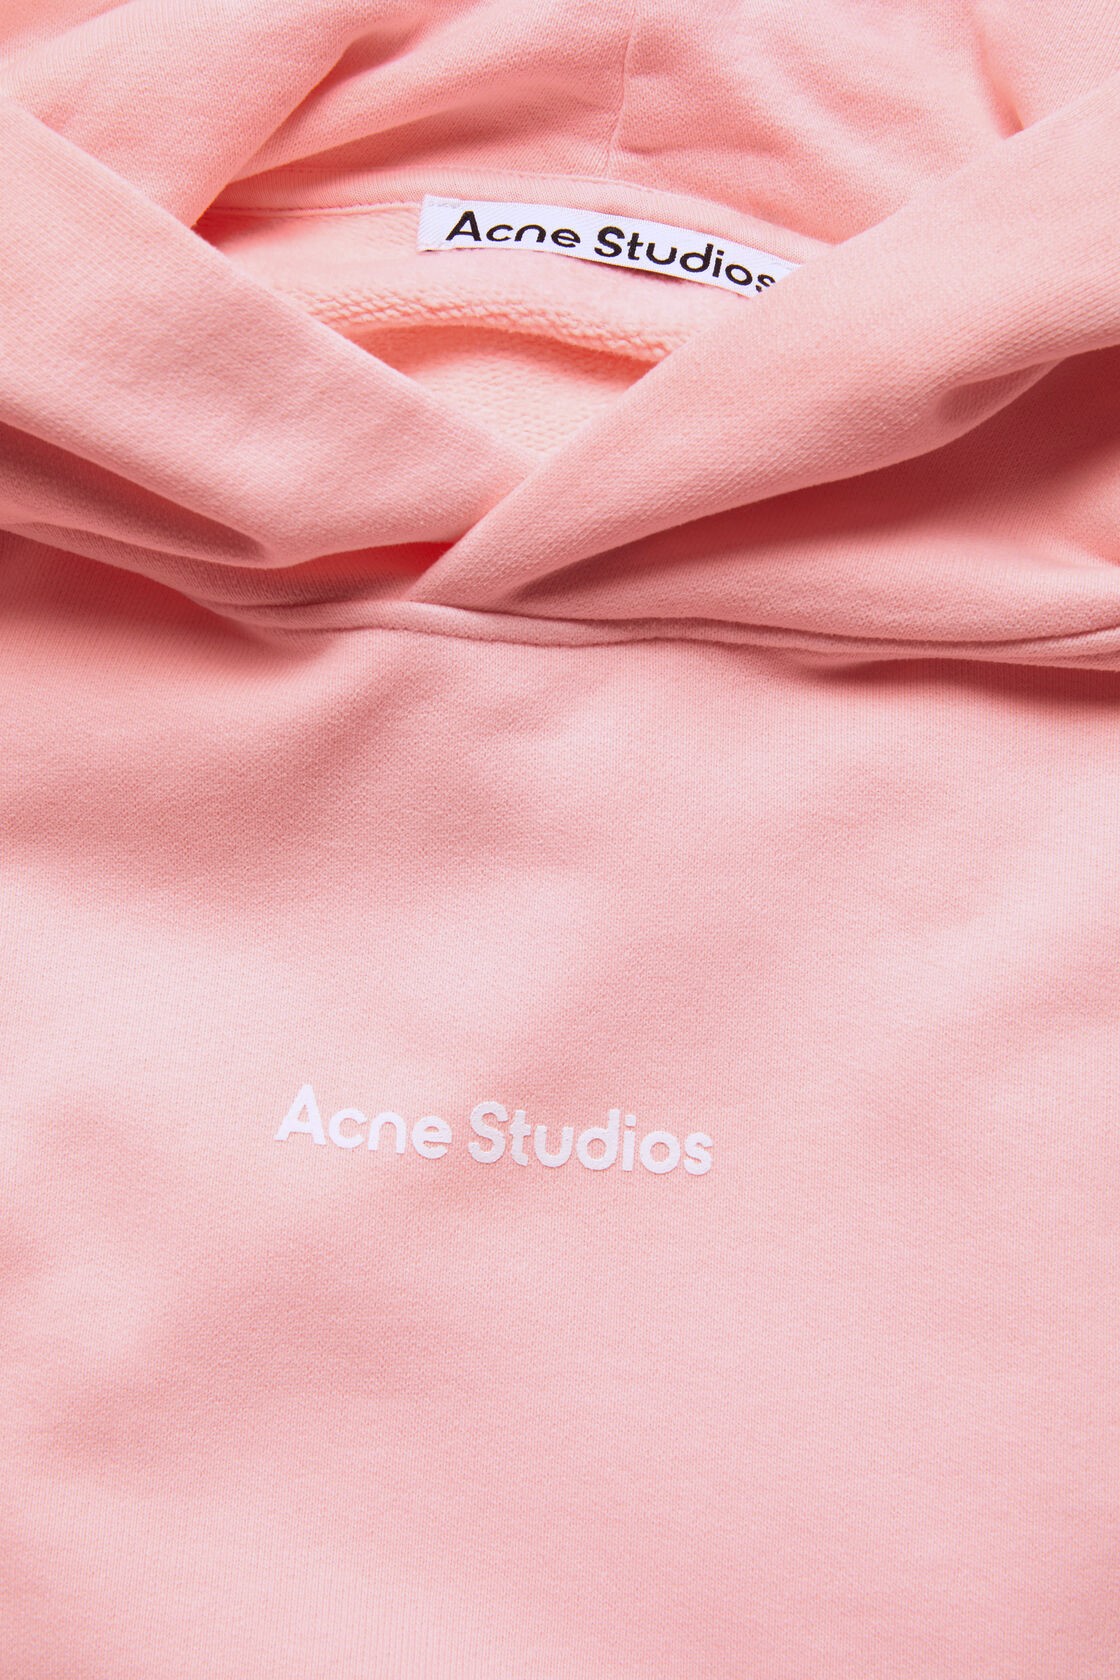 ACNE STUDIOS Stamp Oversize Sweathoodie in Pale Pink L